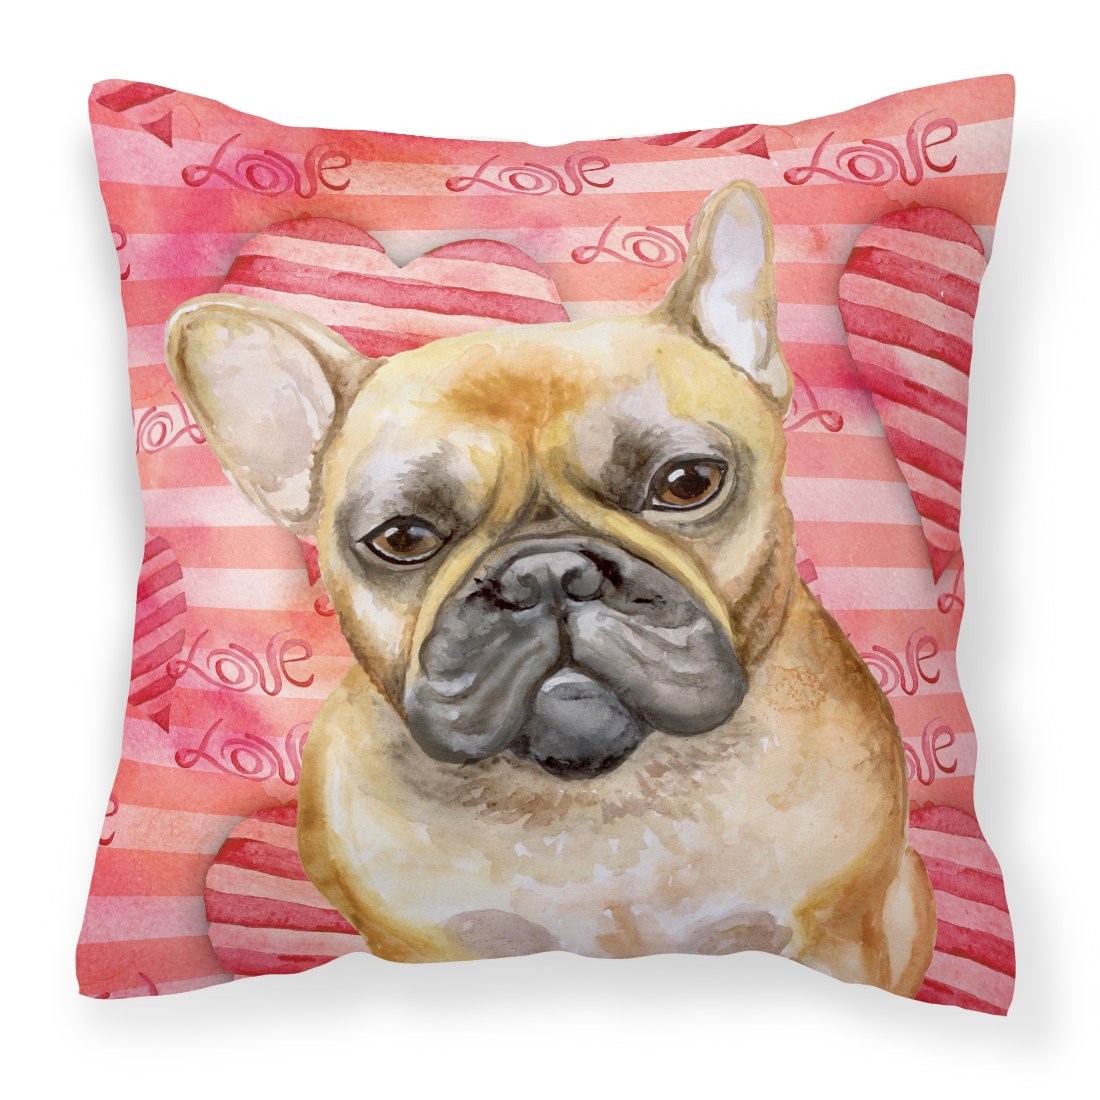 French Bulldog Love Fabric Decorative Pillow BB9775PW1818 by Caroline's Treasures